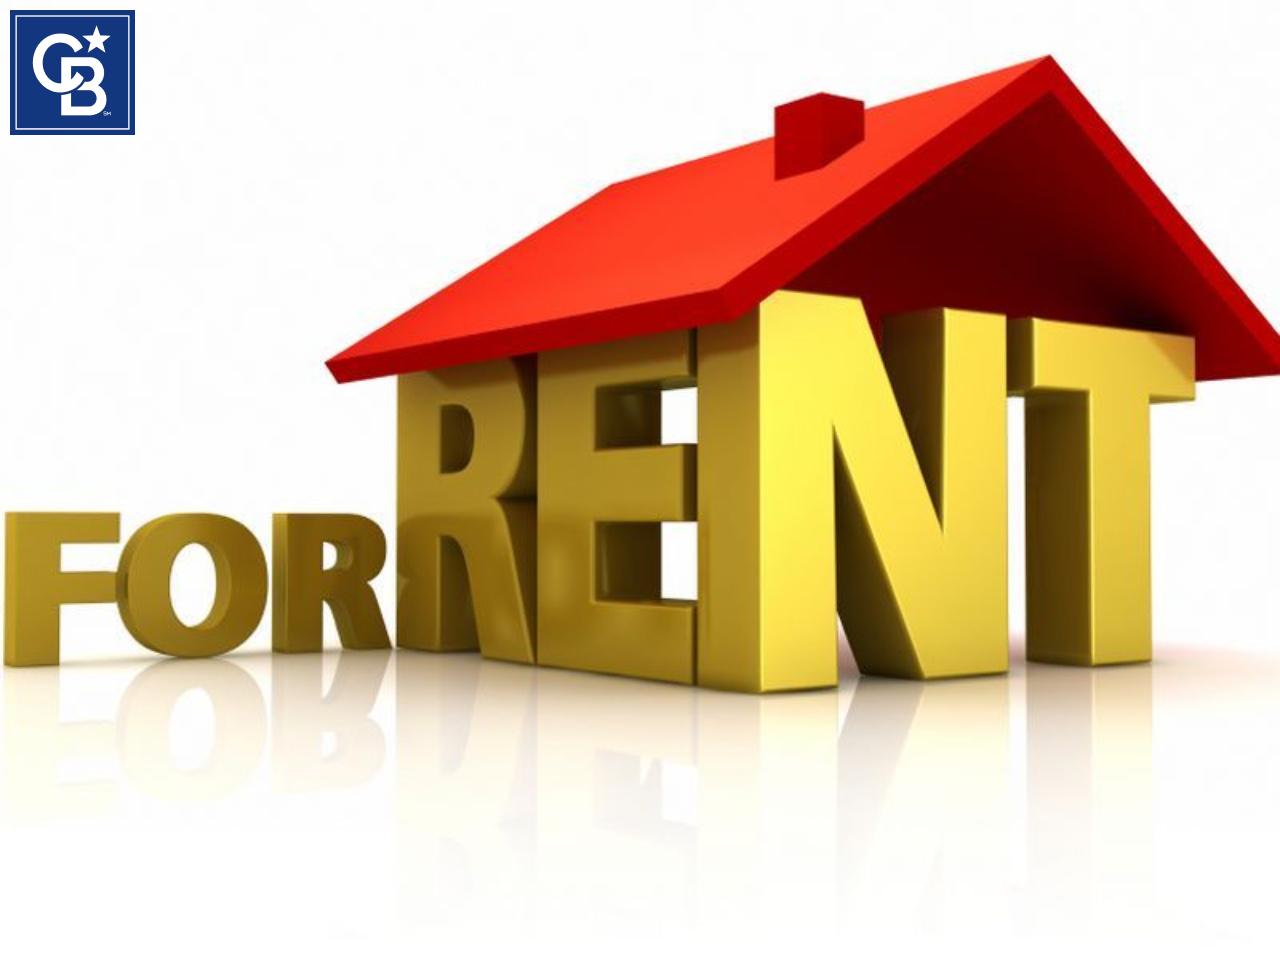 6265_for-rent Seasonal Rentals - Coldwell Banker Premier